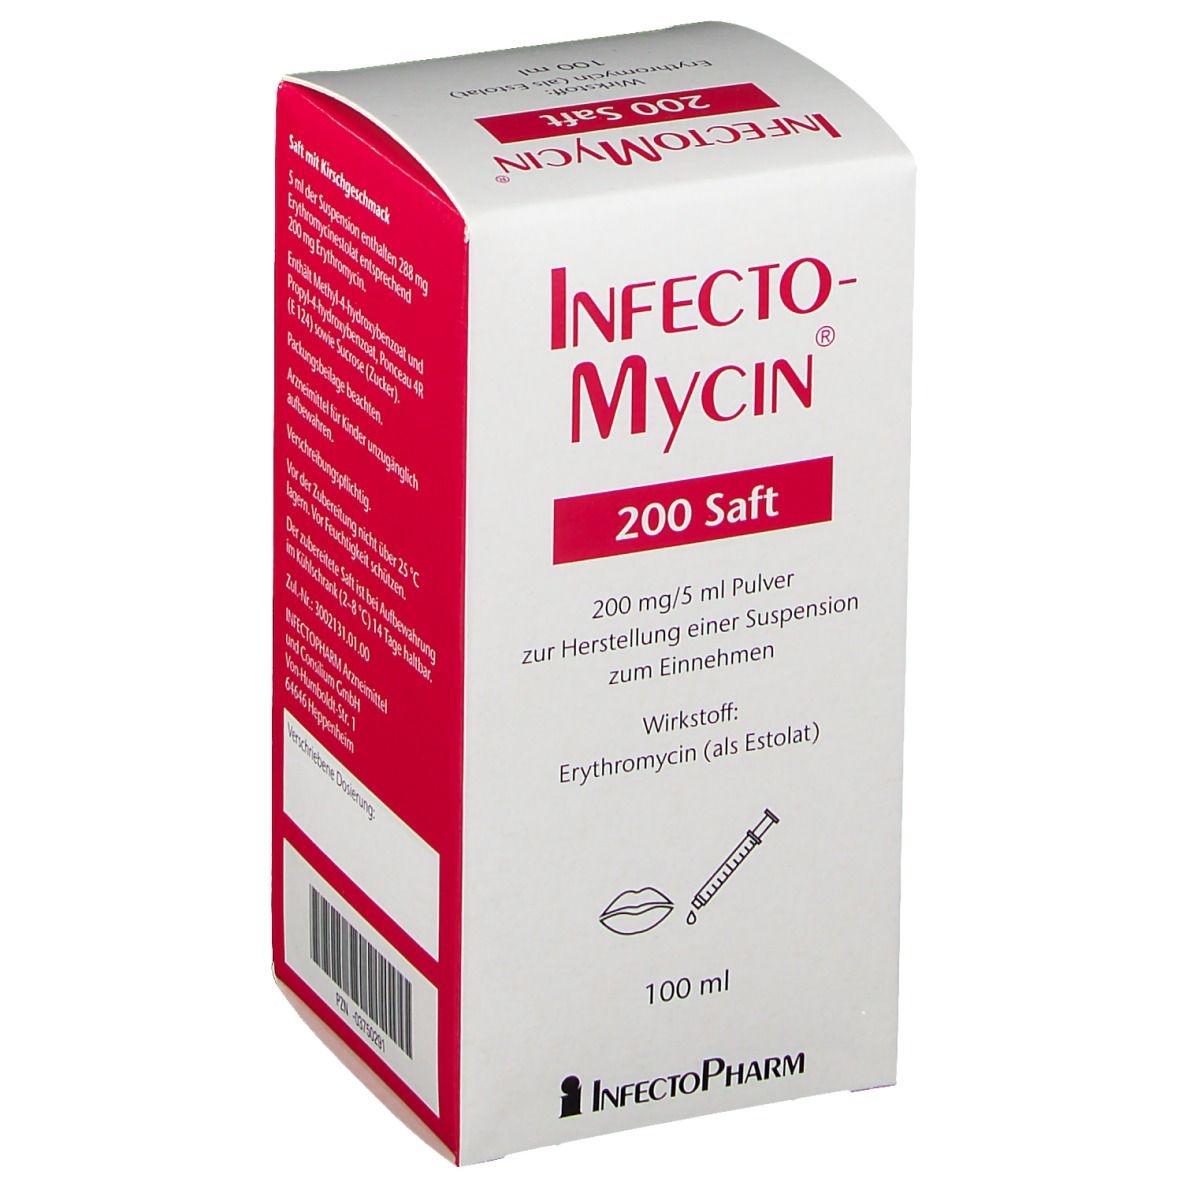 InfectoMycin® 200 Saft